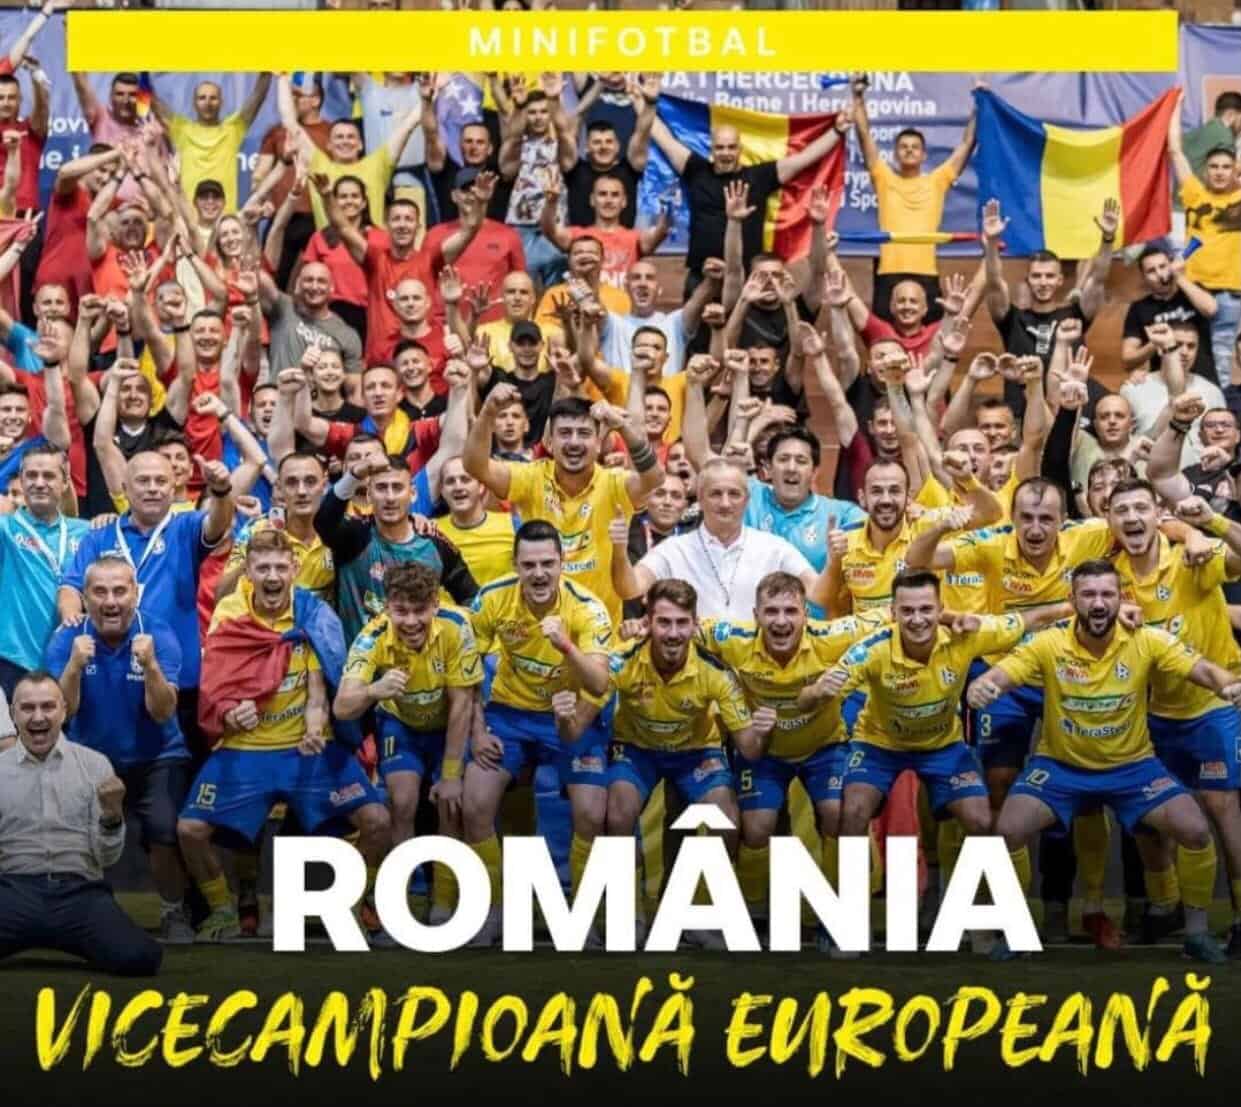 sibienii neacșa, popa și tineiu, vicecampioni europeni la minifotbal, după ce românia a pierdut finala cu serbia